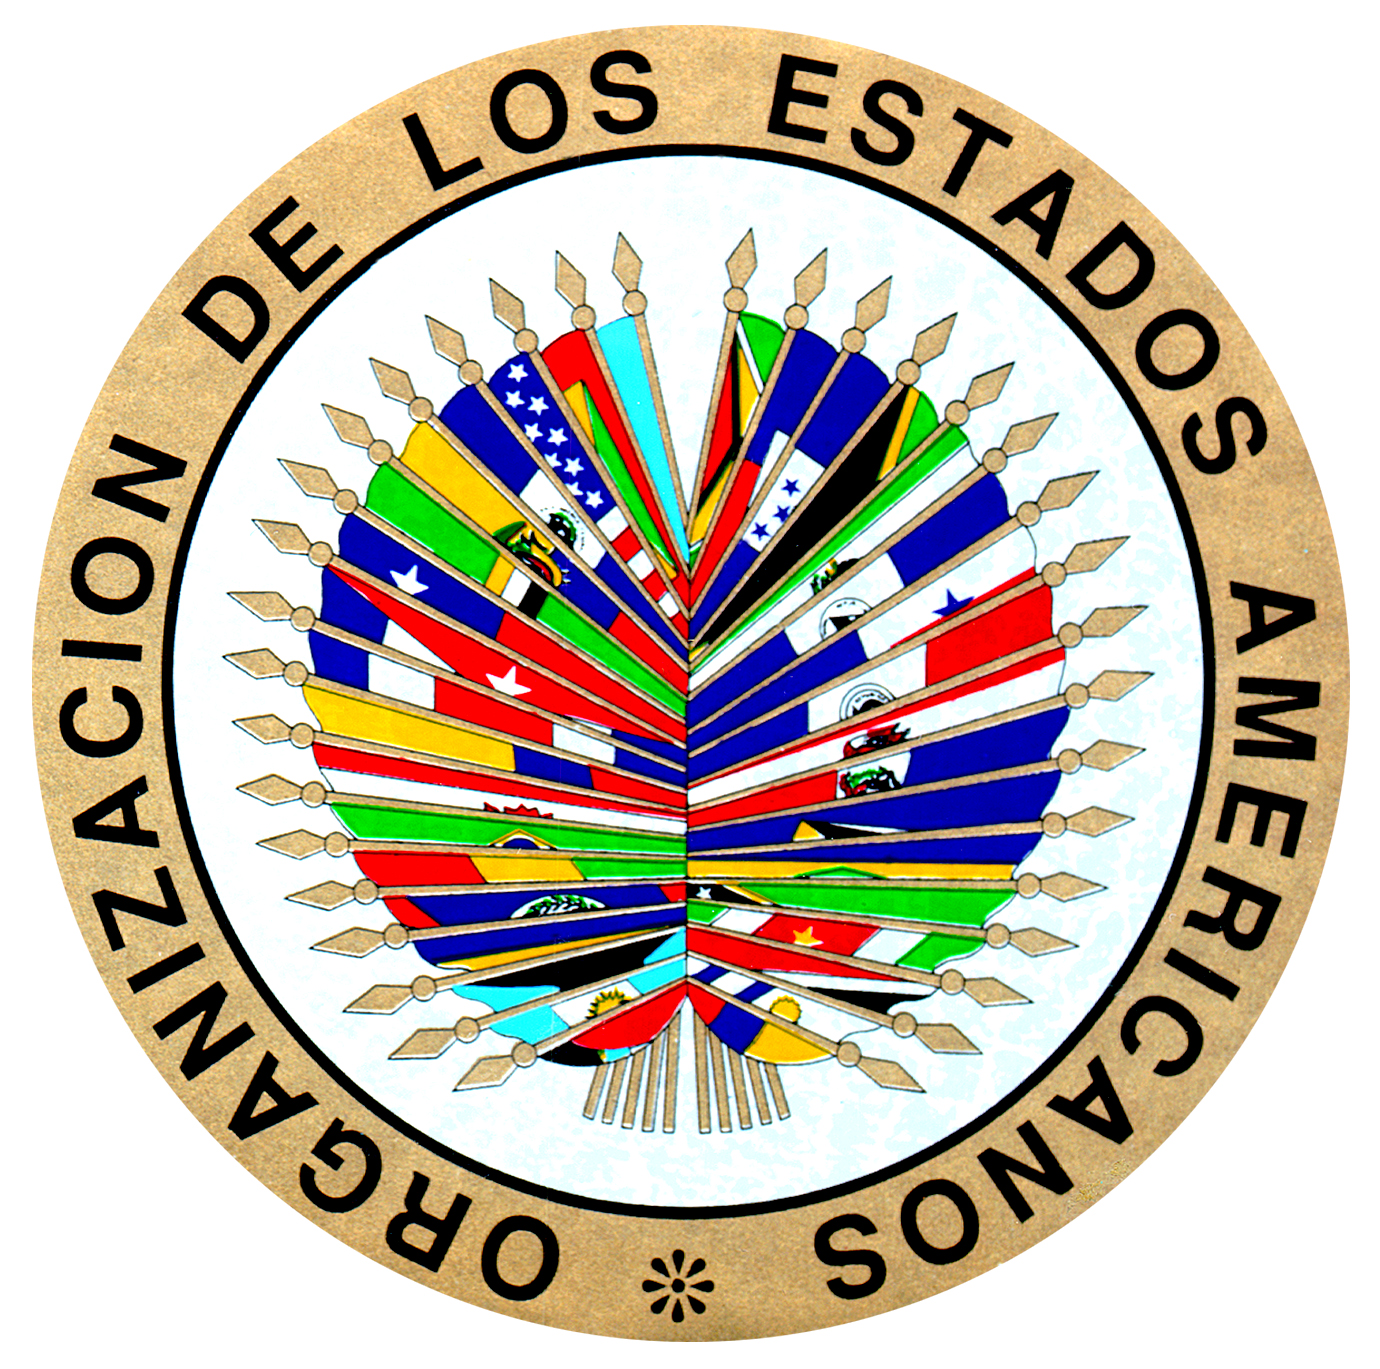 escudo nacional dominicano